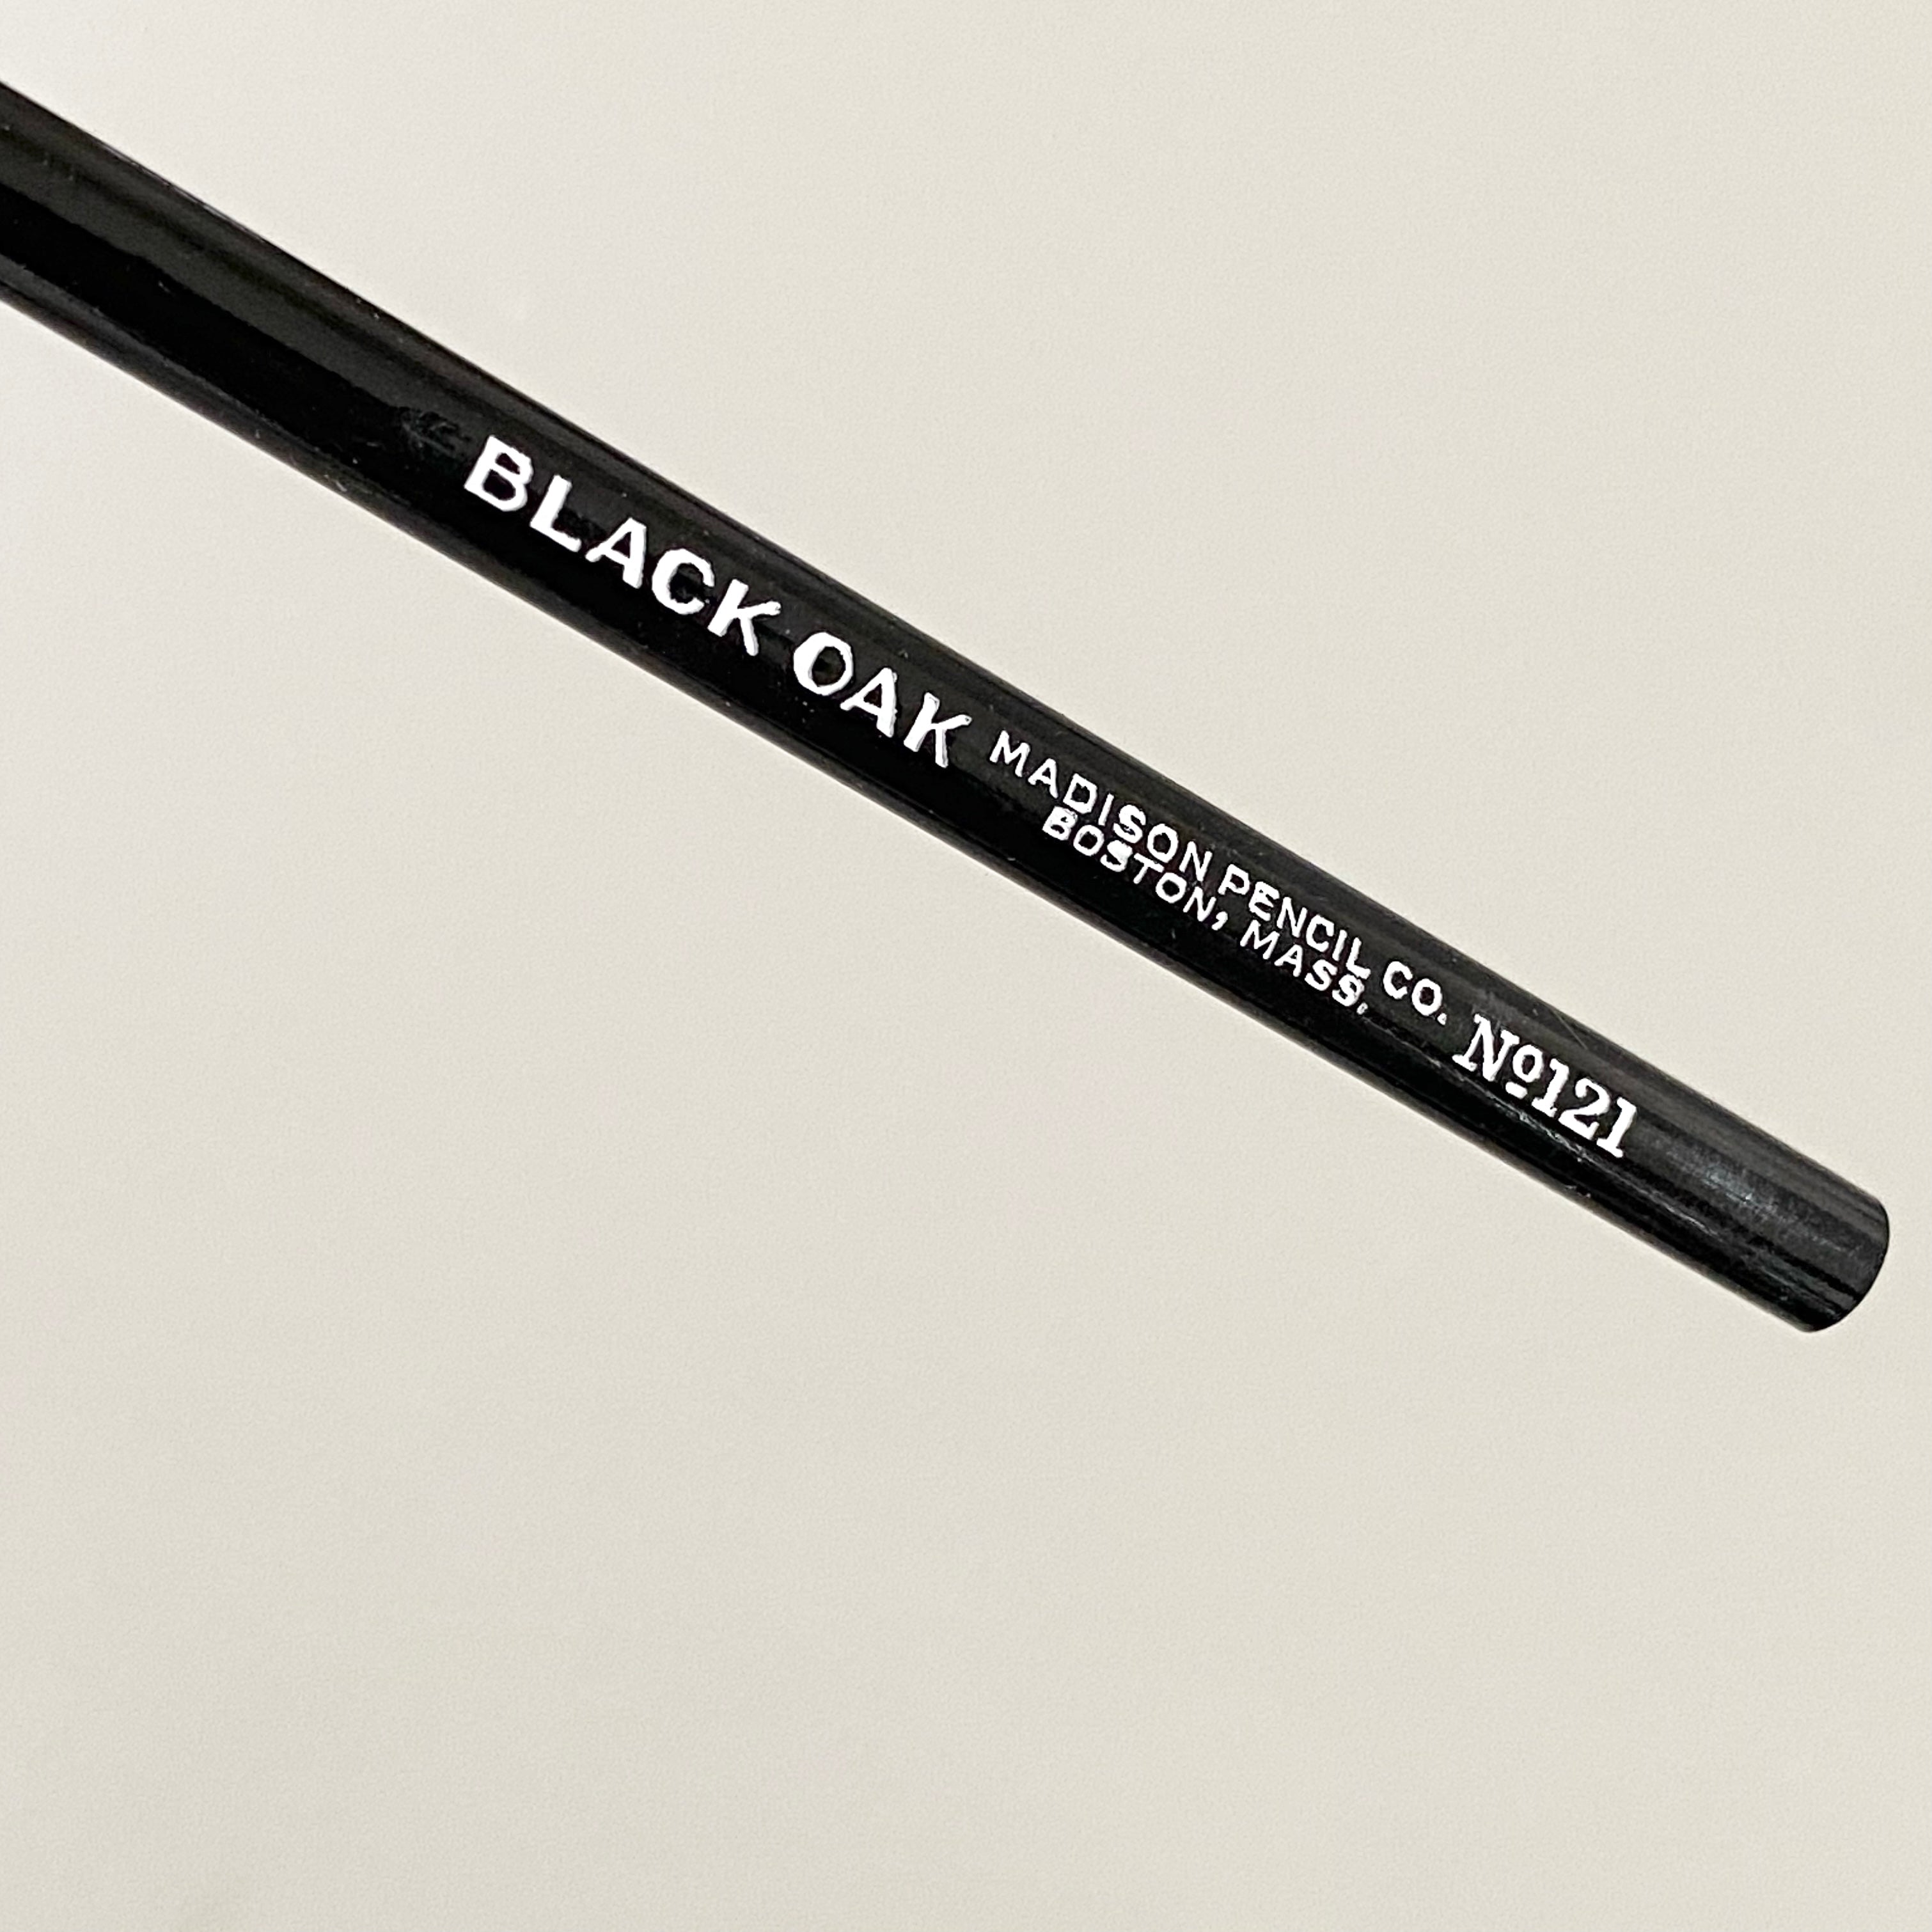 Lápiz Black Oak 121. Vintage. Madison Pencils Co